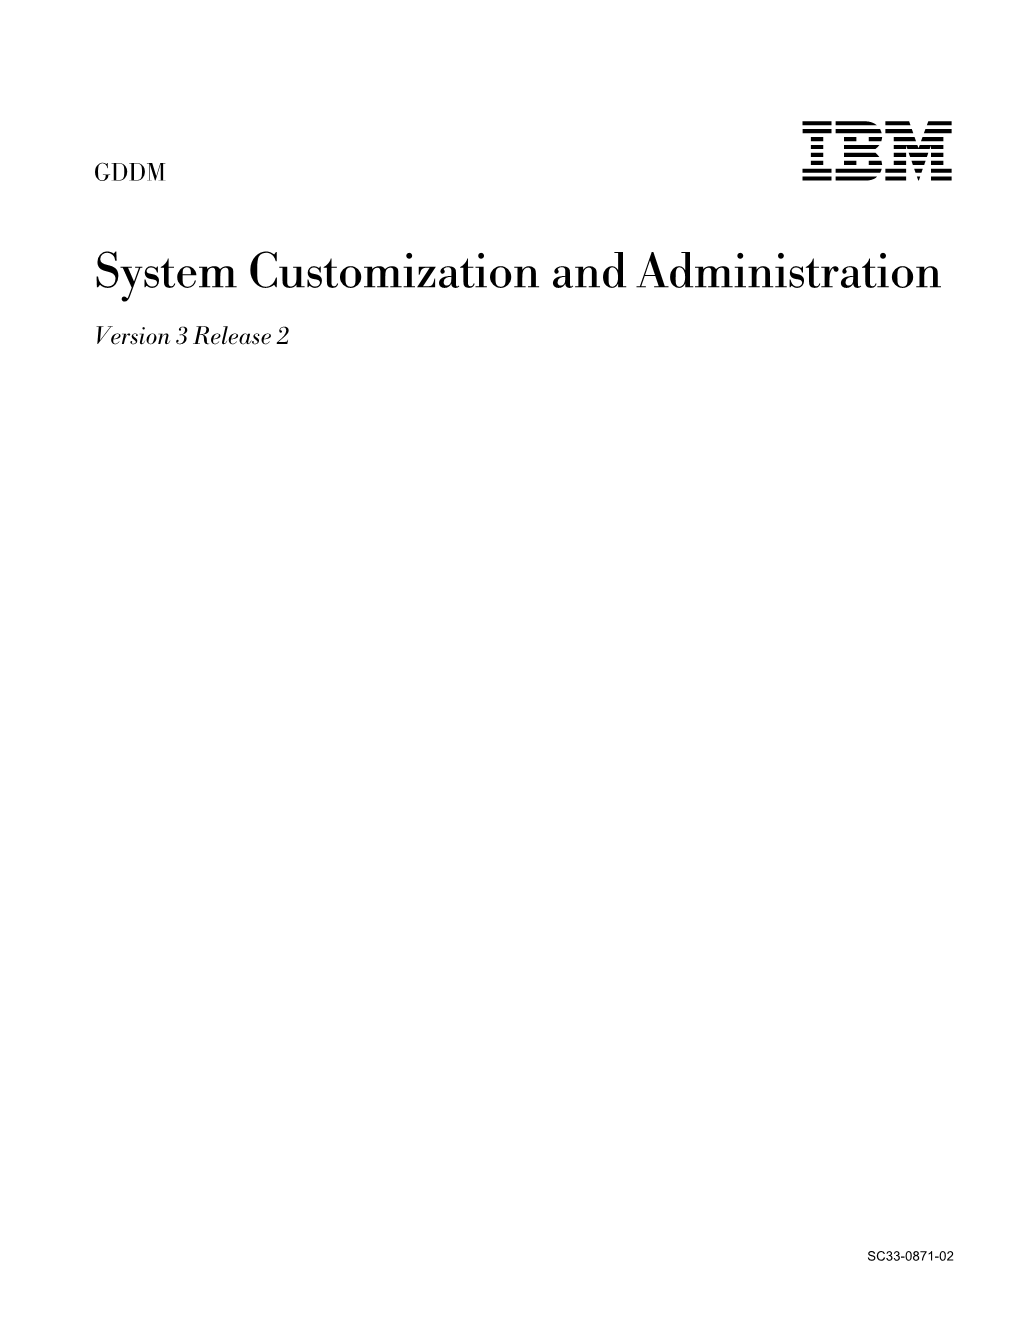 IBM GDDM System Customization and Administrationsc33-0871-02